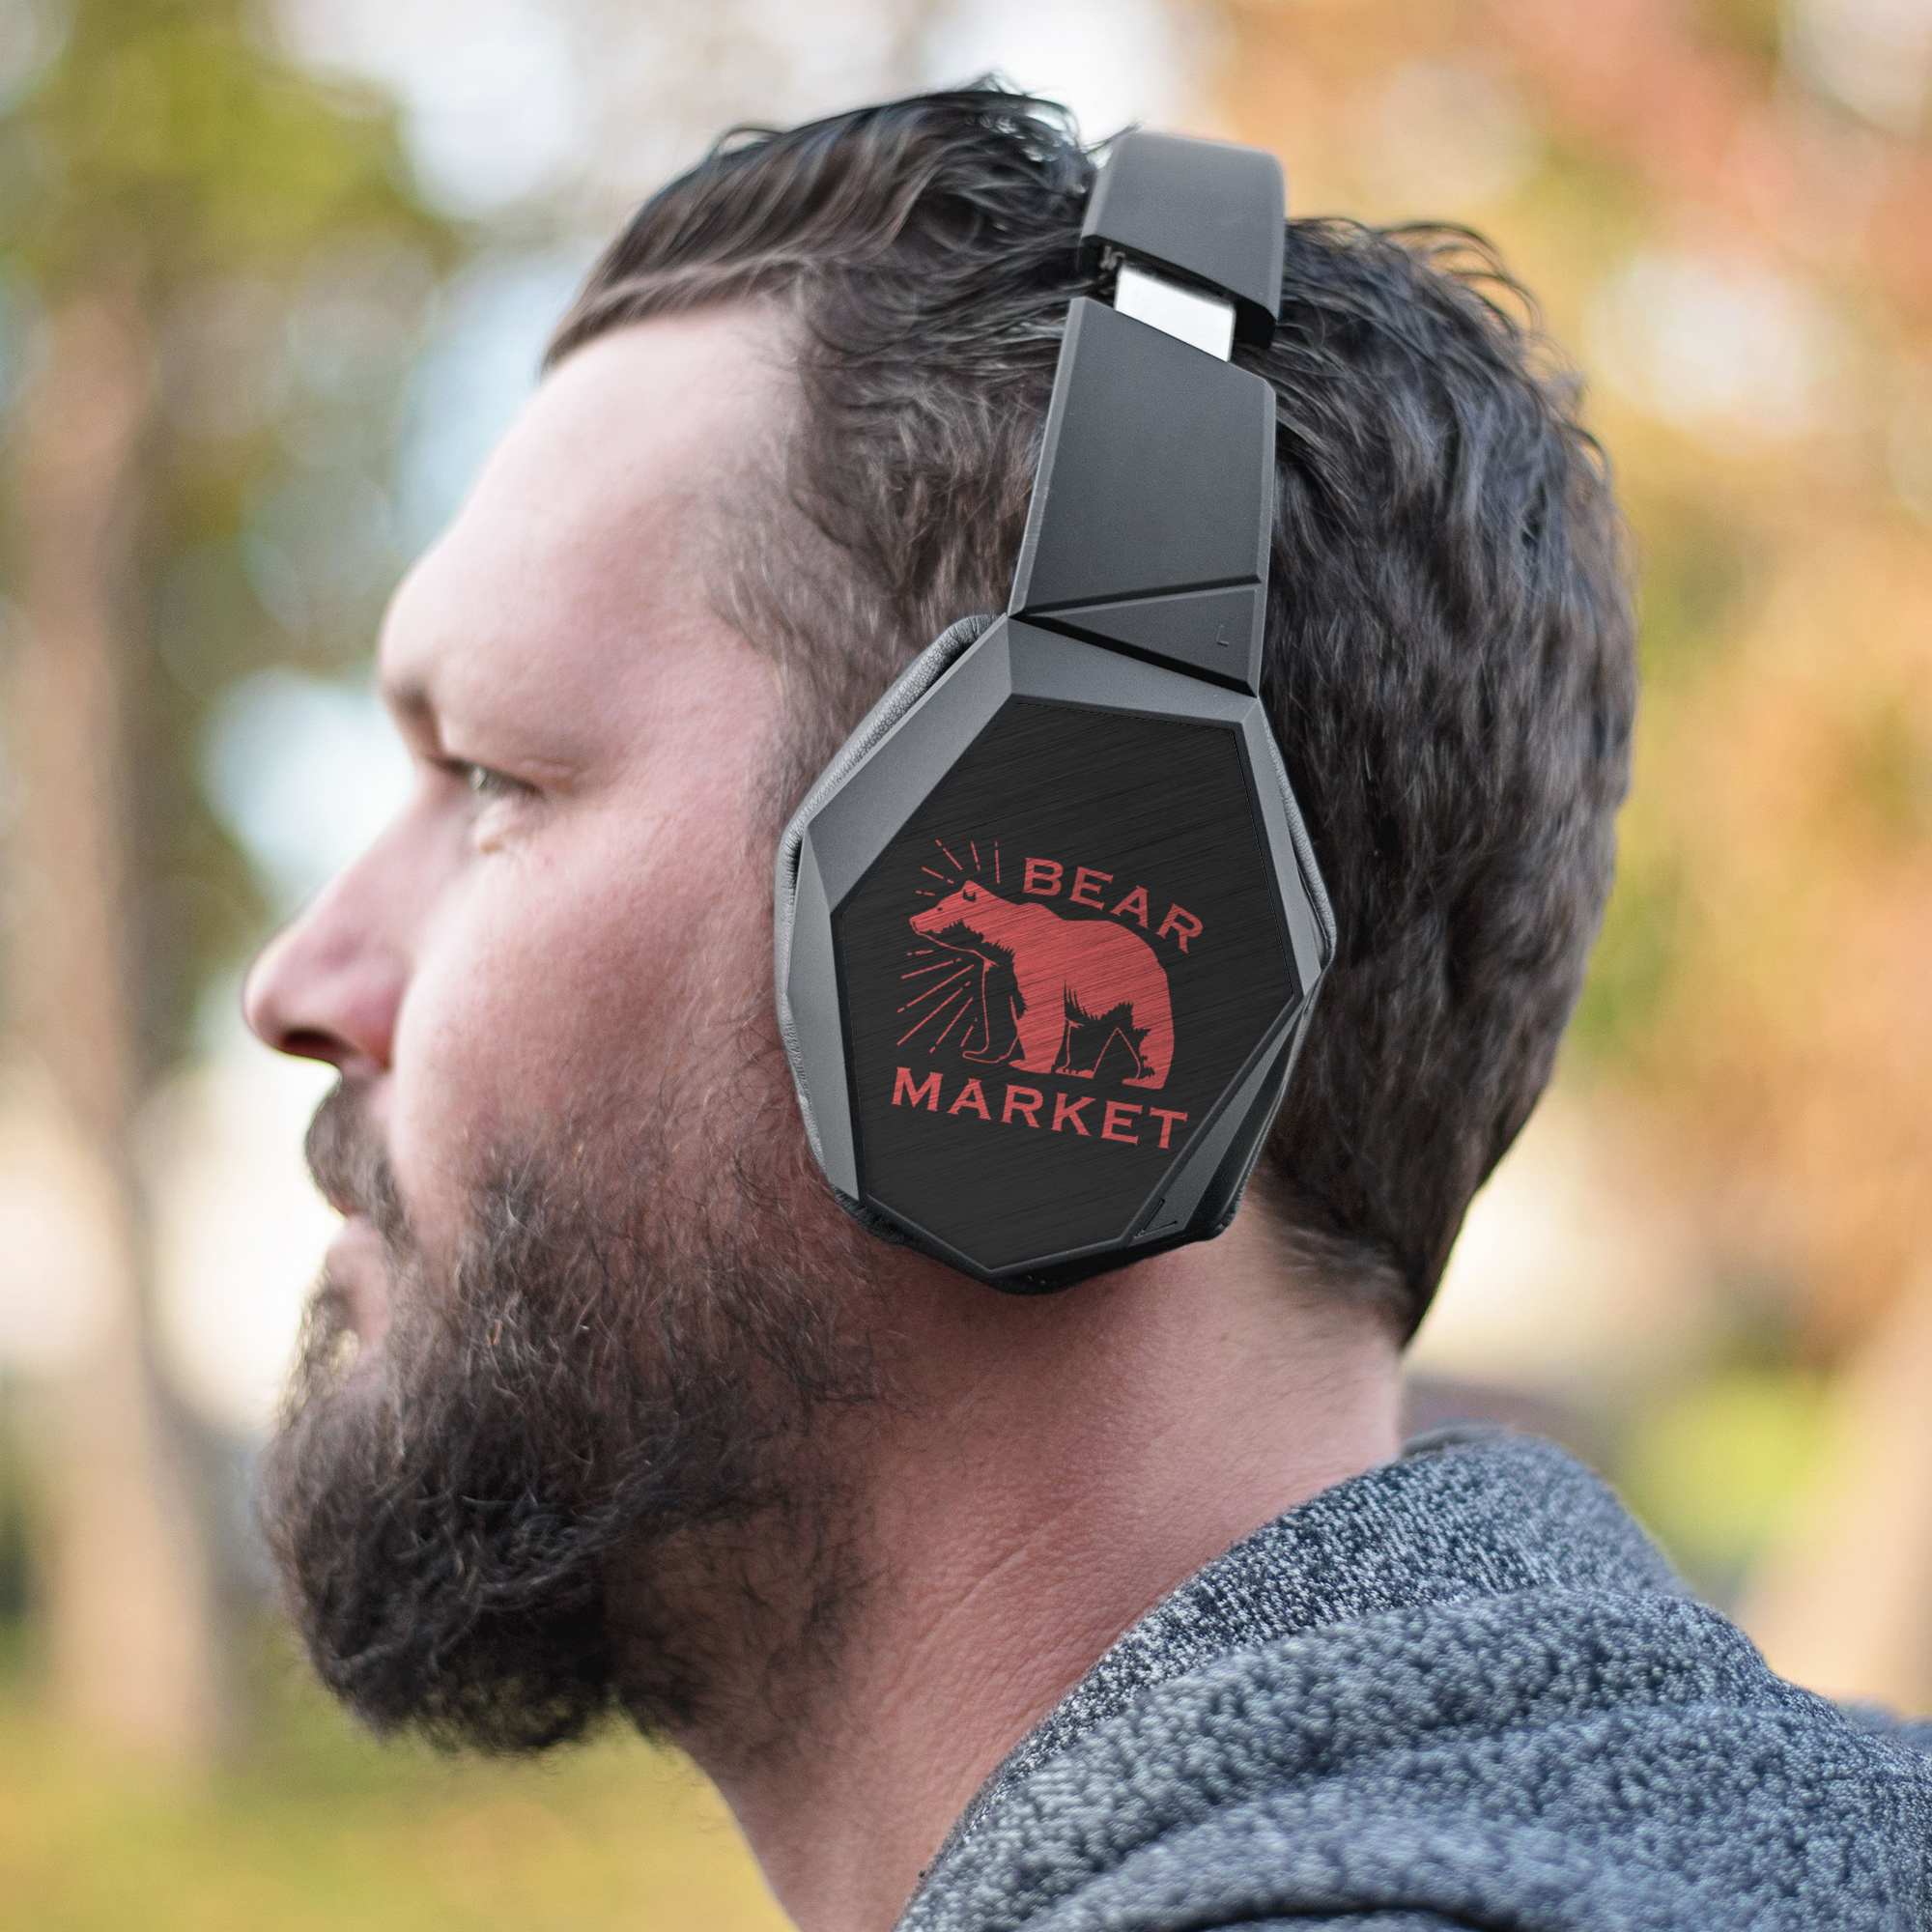 Headphones - Wrapsody / Bear Market